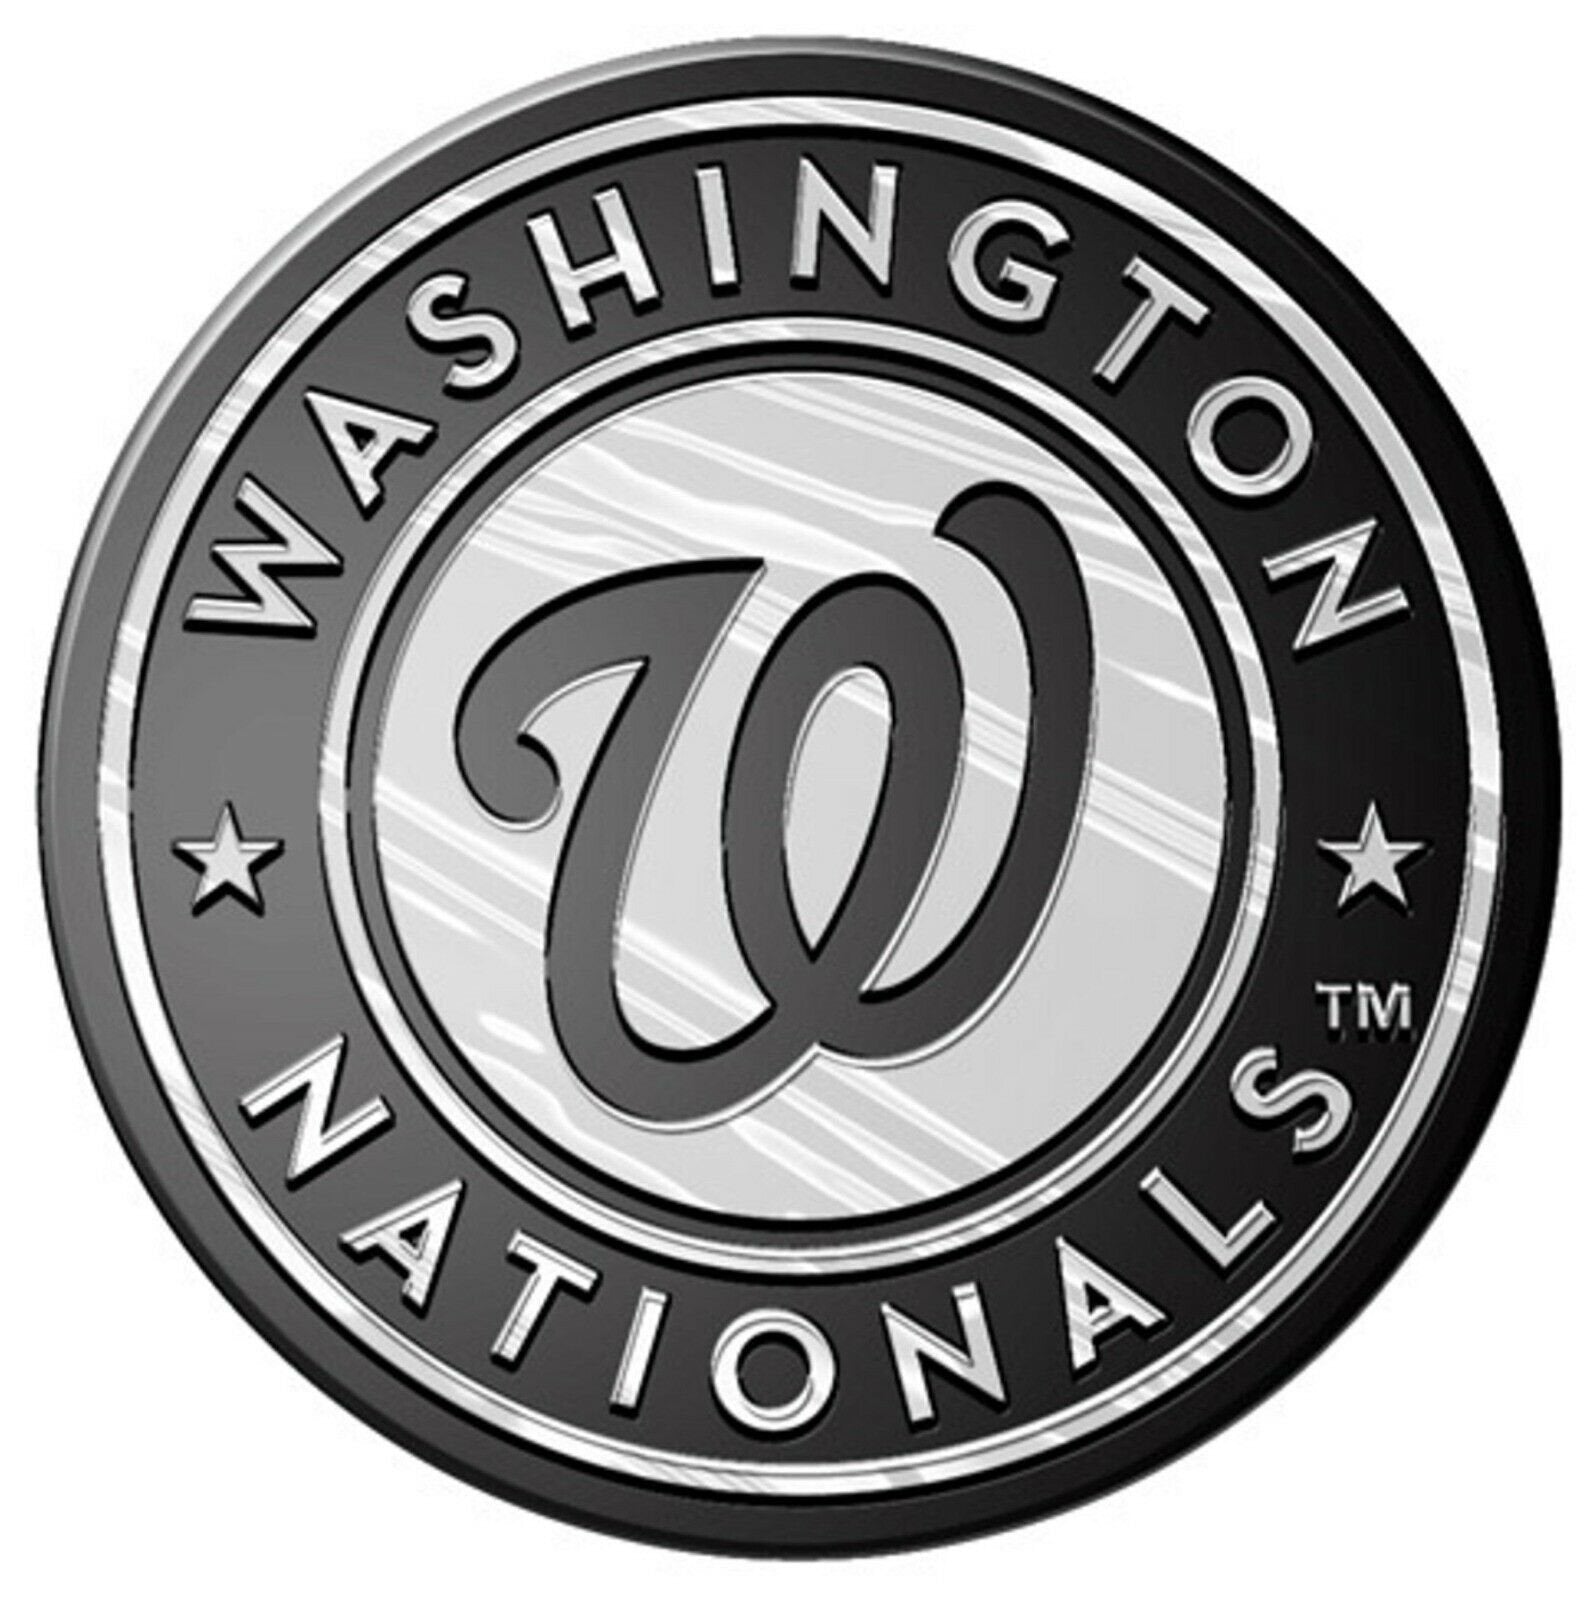 Washington Nationals Auto Emblem, Plastic Molded, Silver Chrome Color, Raised 3D Effect, Adhesive Backing